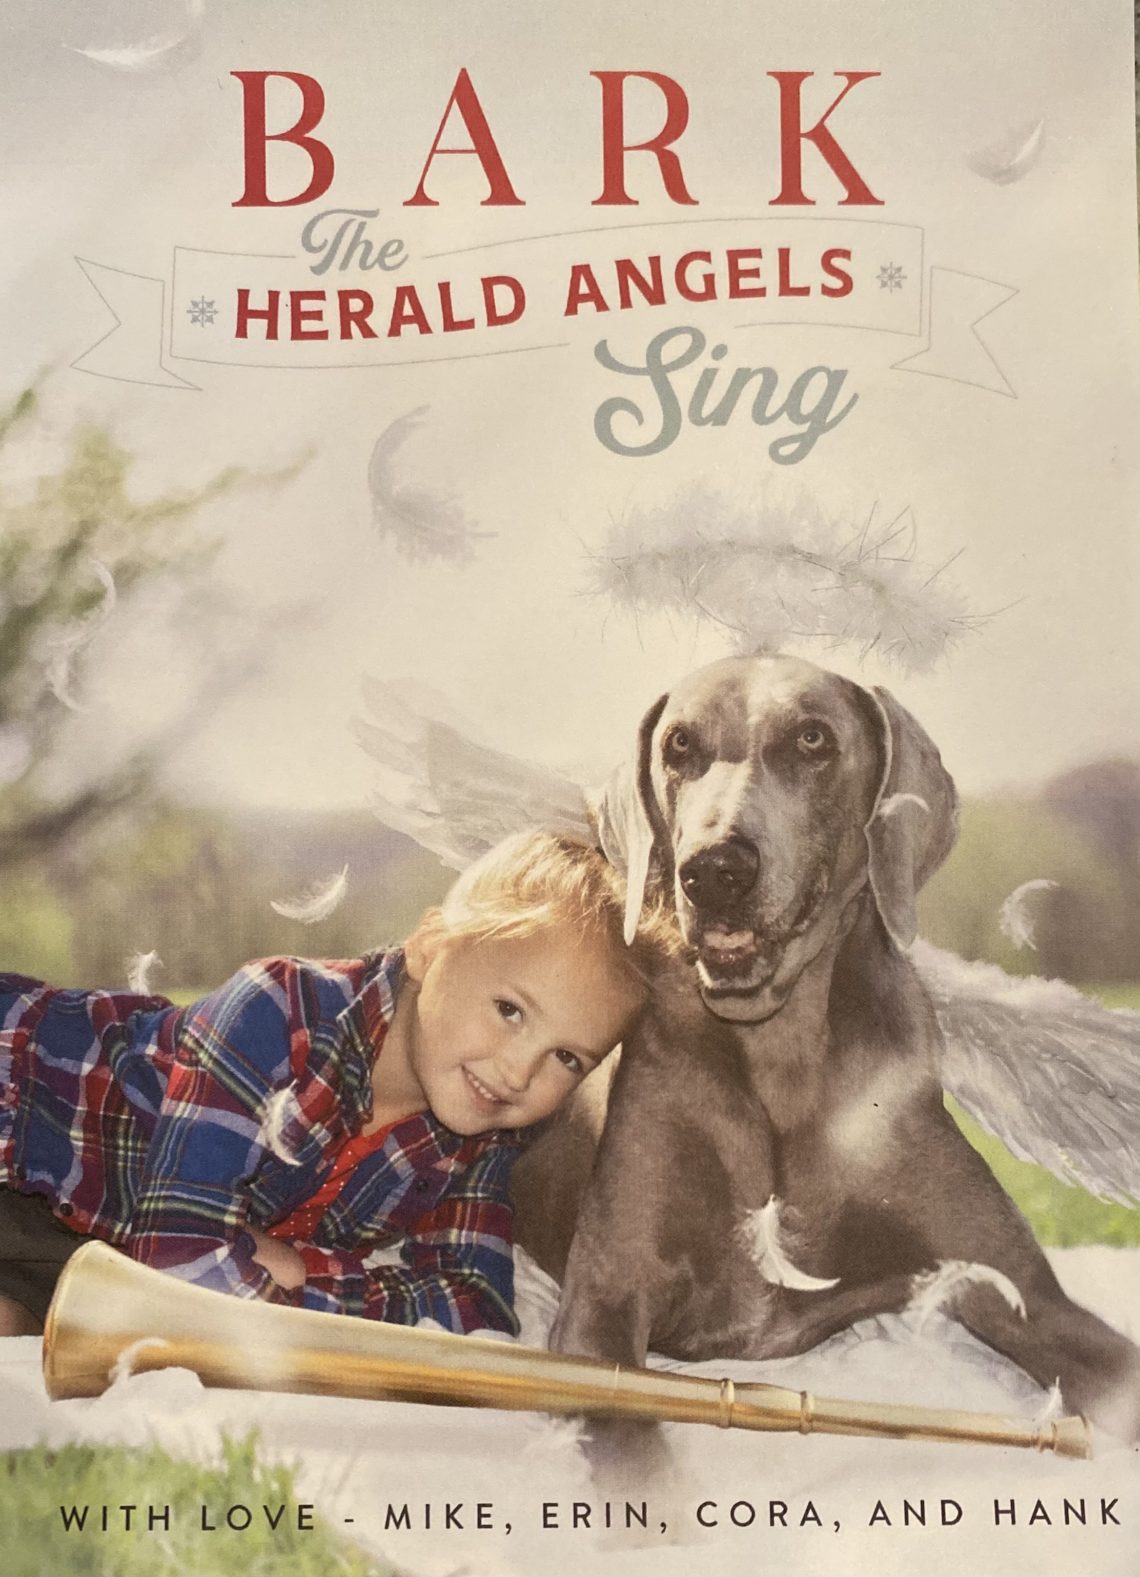 Hank, Cora, Bark the Herald Angels Sing